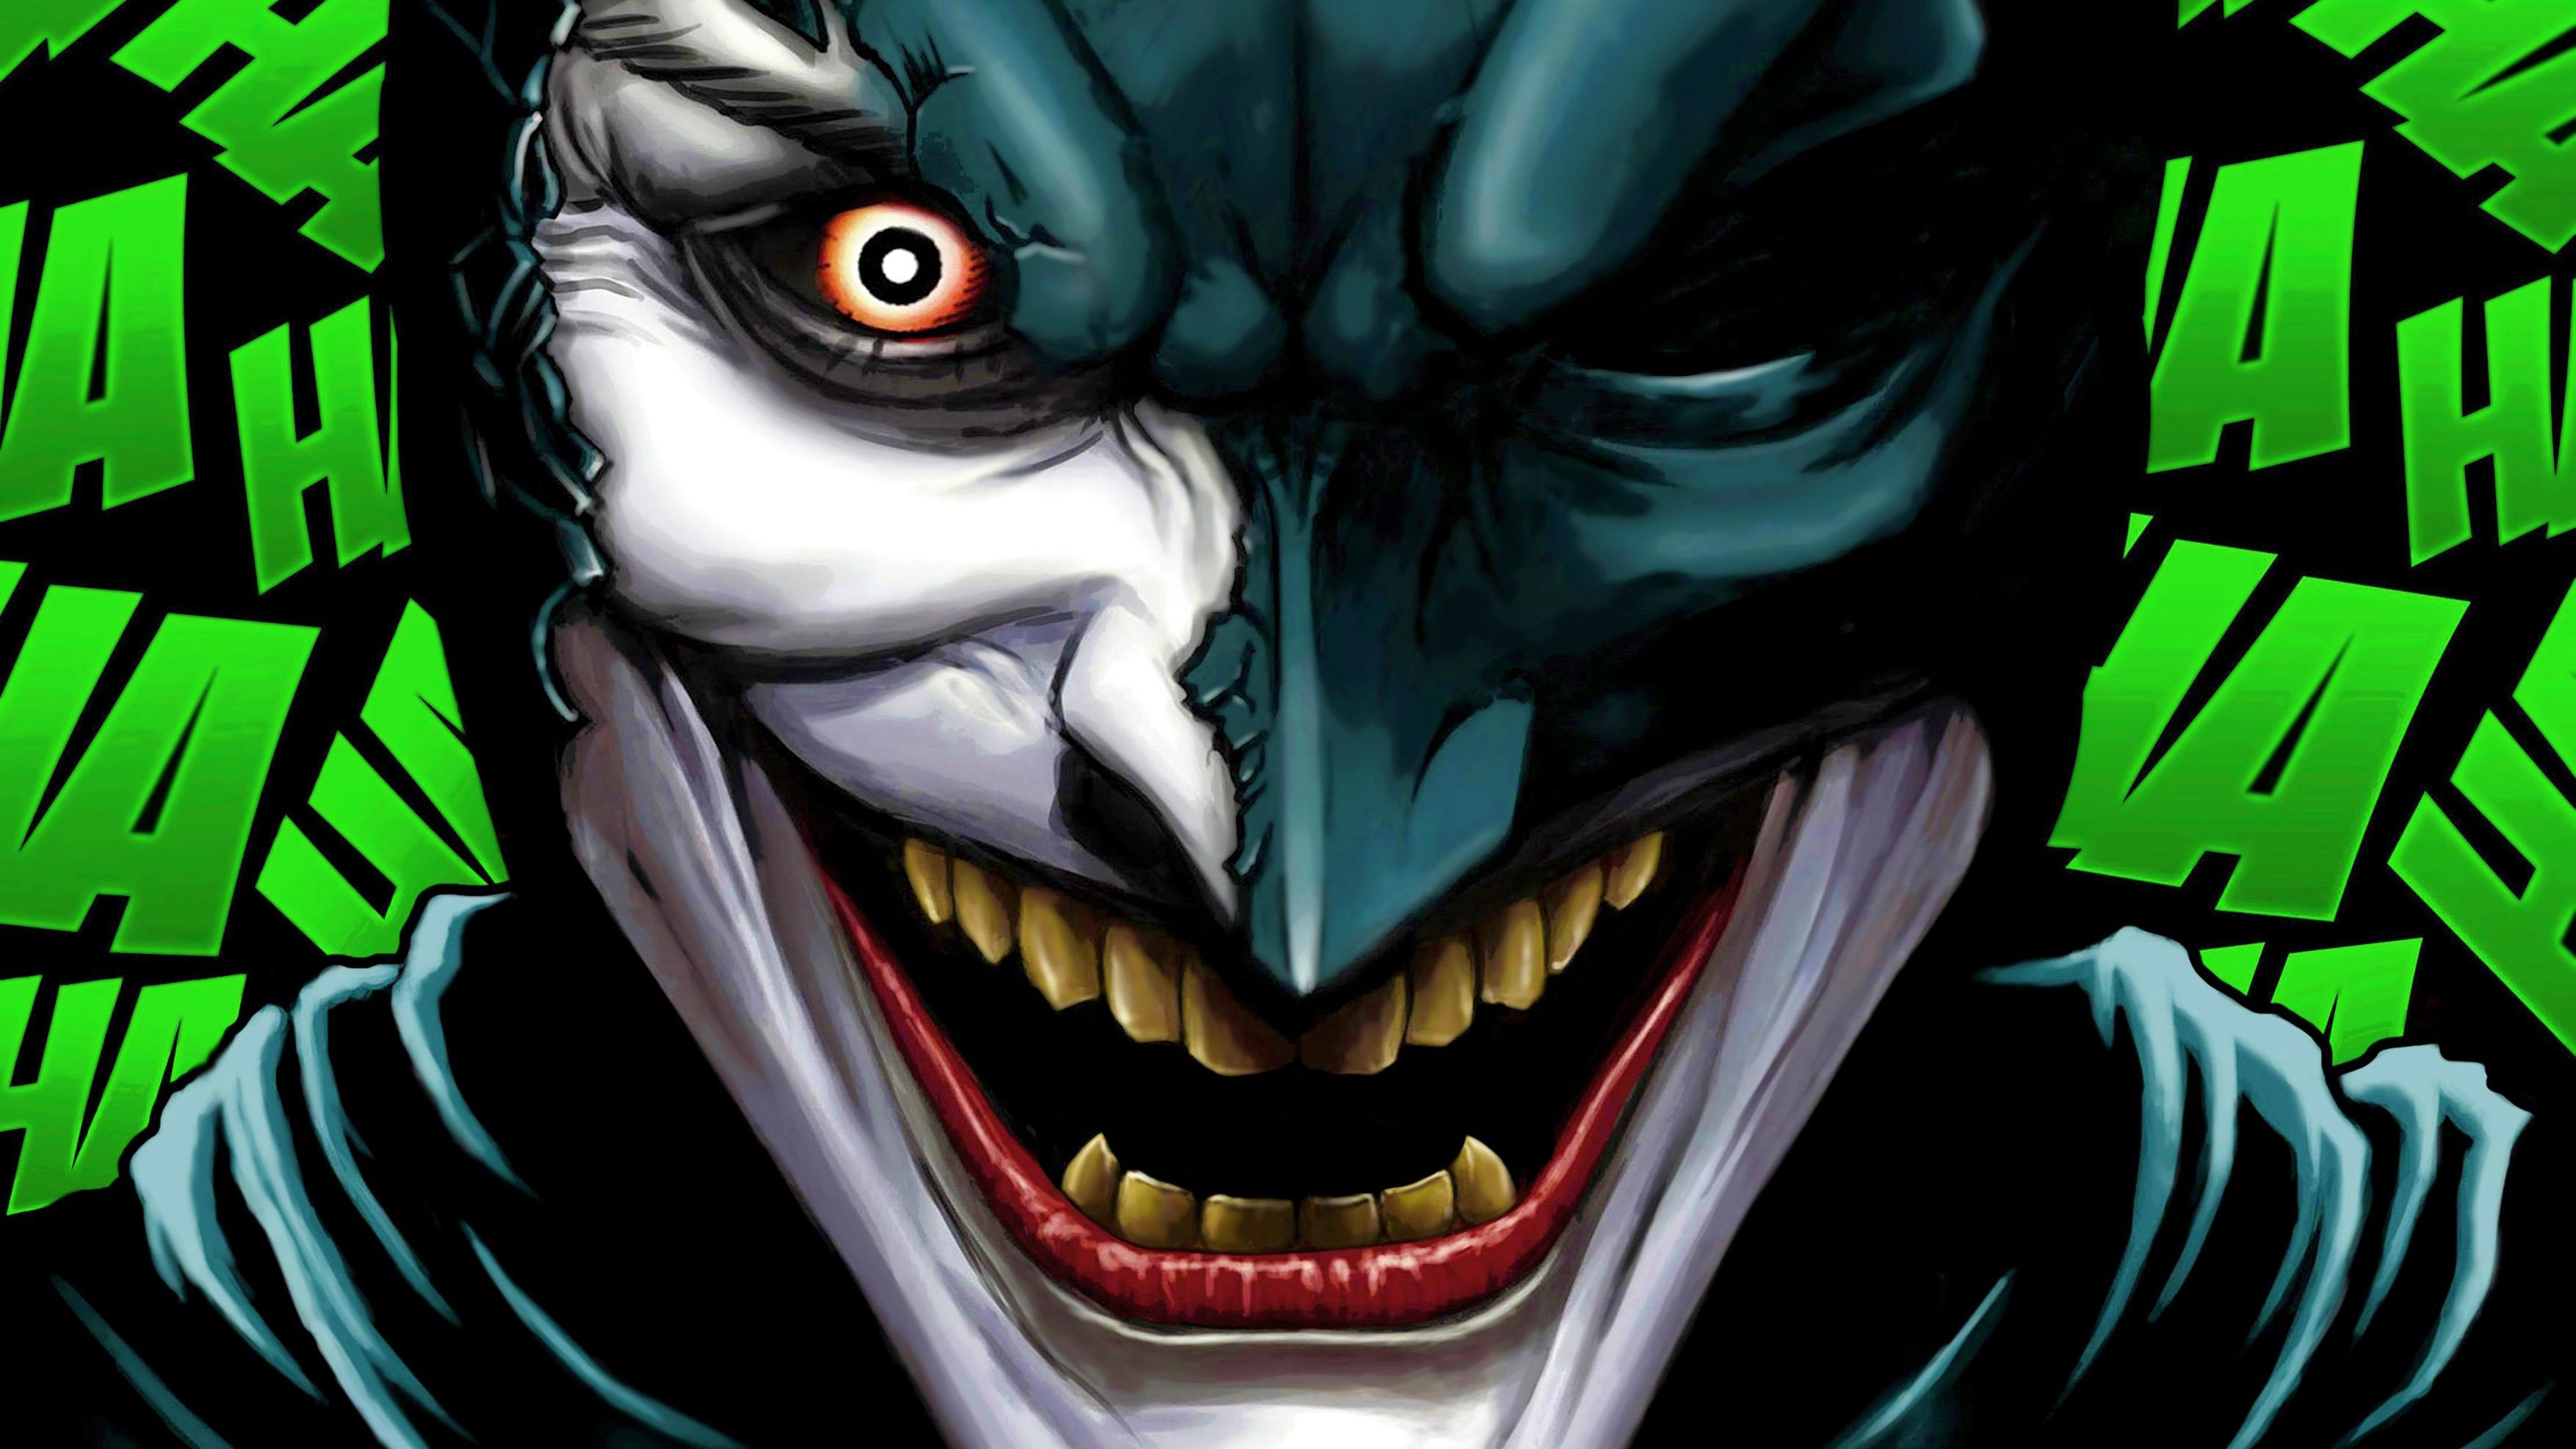 Wallpapers Batman Joker Dc Comics Joker Image.